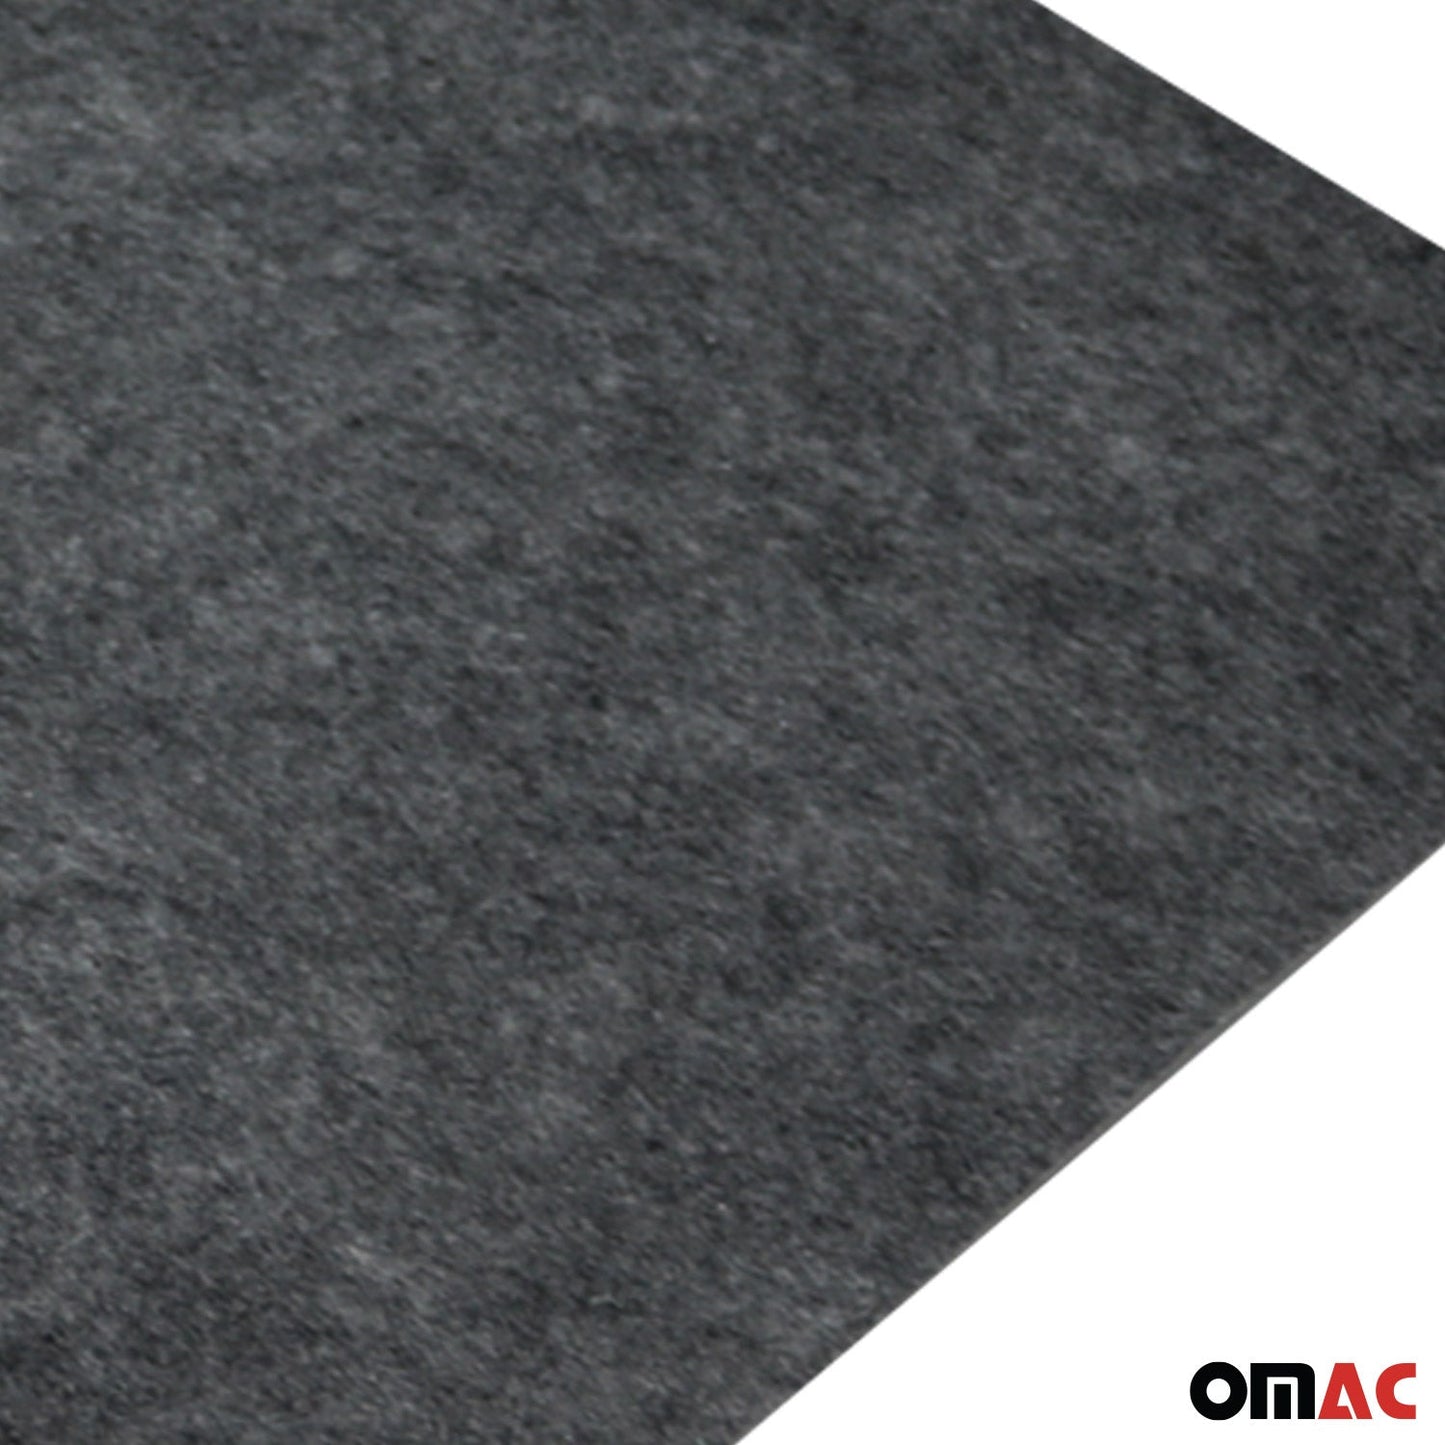 OMAC Rubber Truck Bed Liner Trunk Mat Floor Liner 40x79 inch Chequered Black U019130